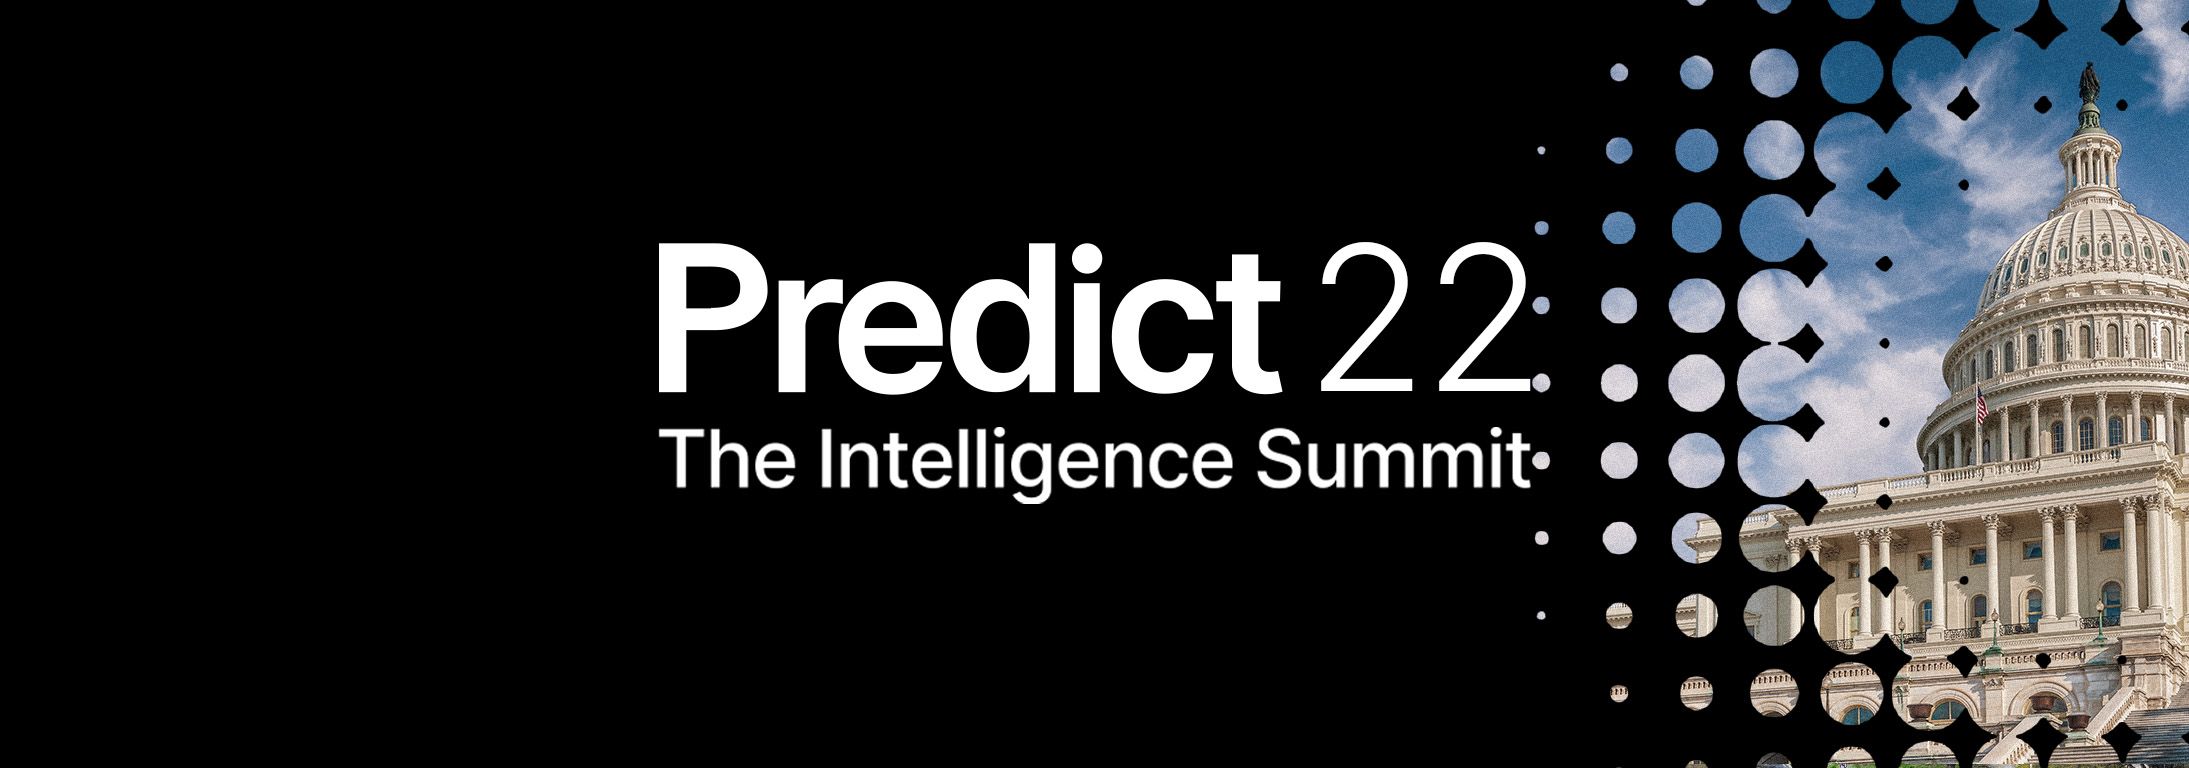 Predict22 The Intelligence Summit - Washington D.C.